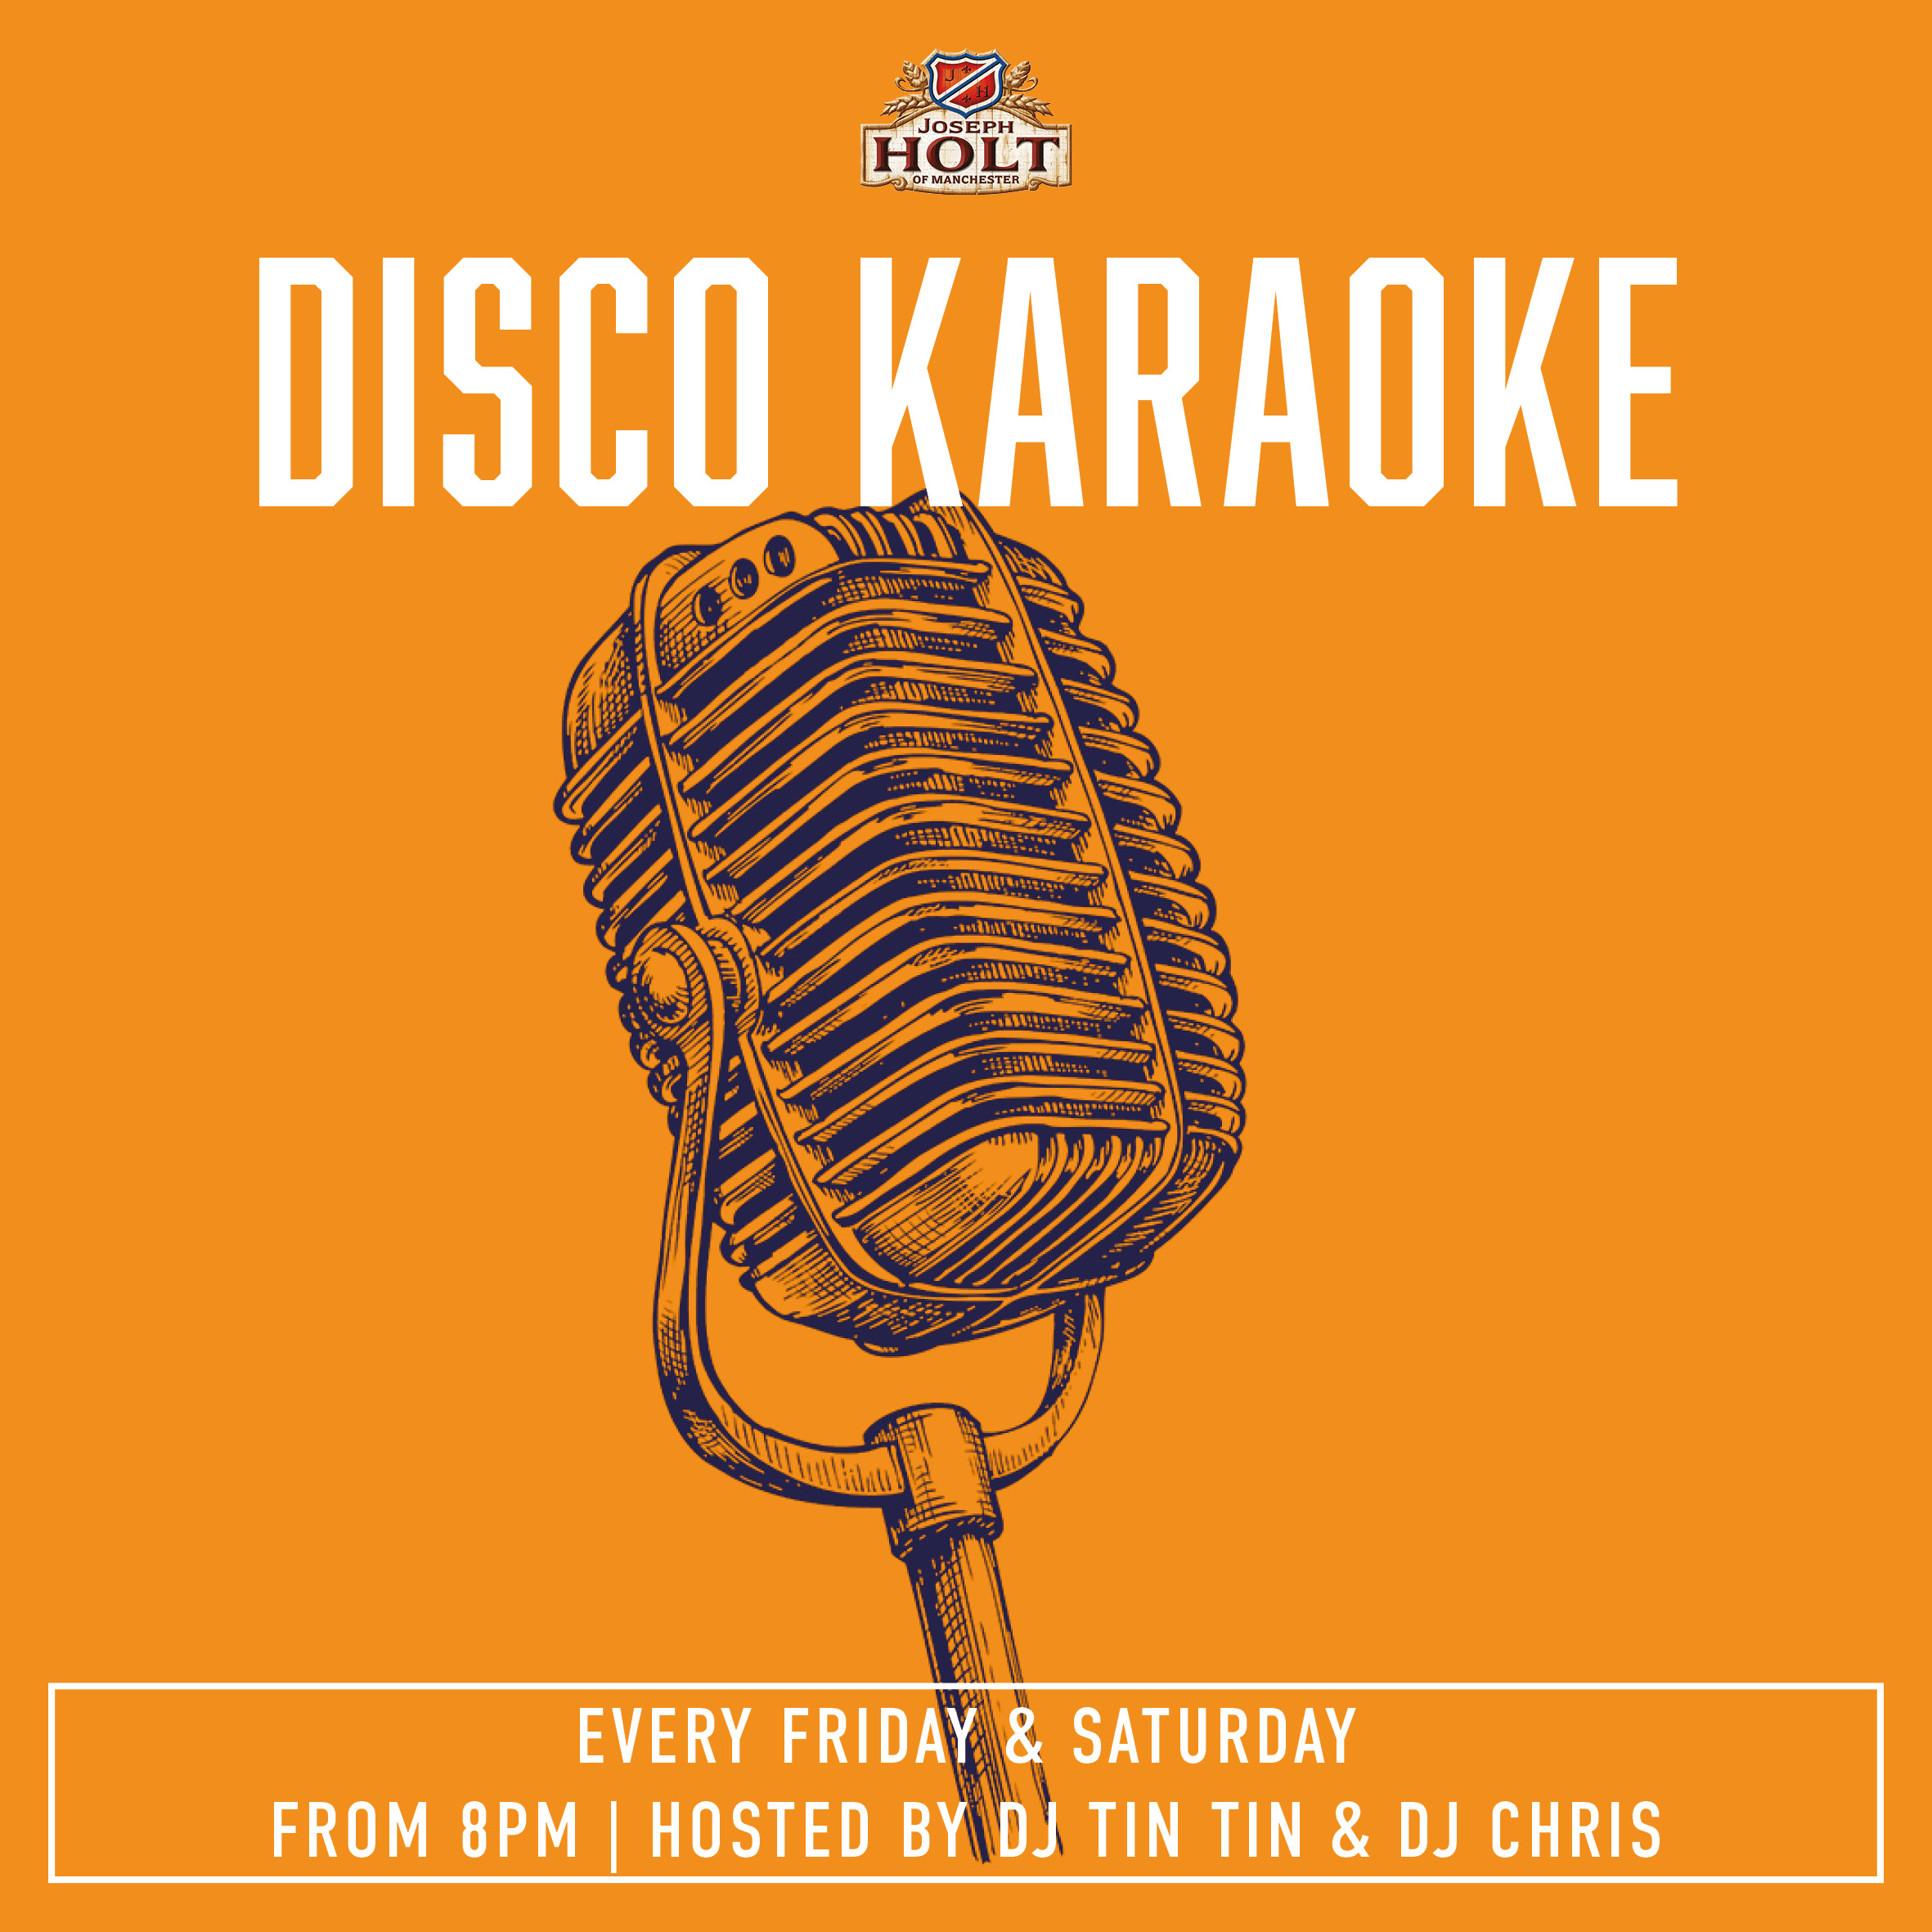 Disco Karaoke